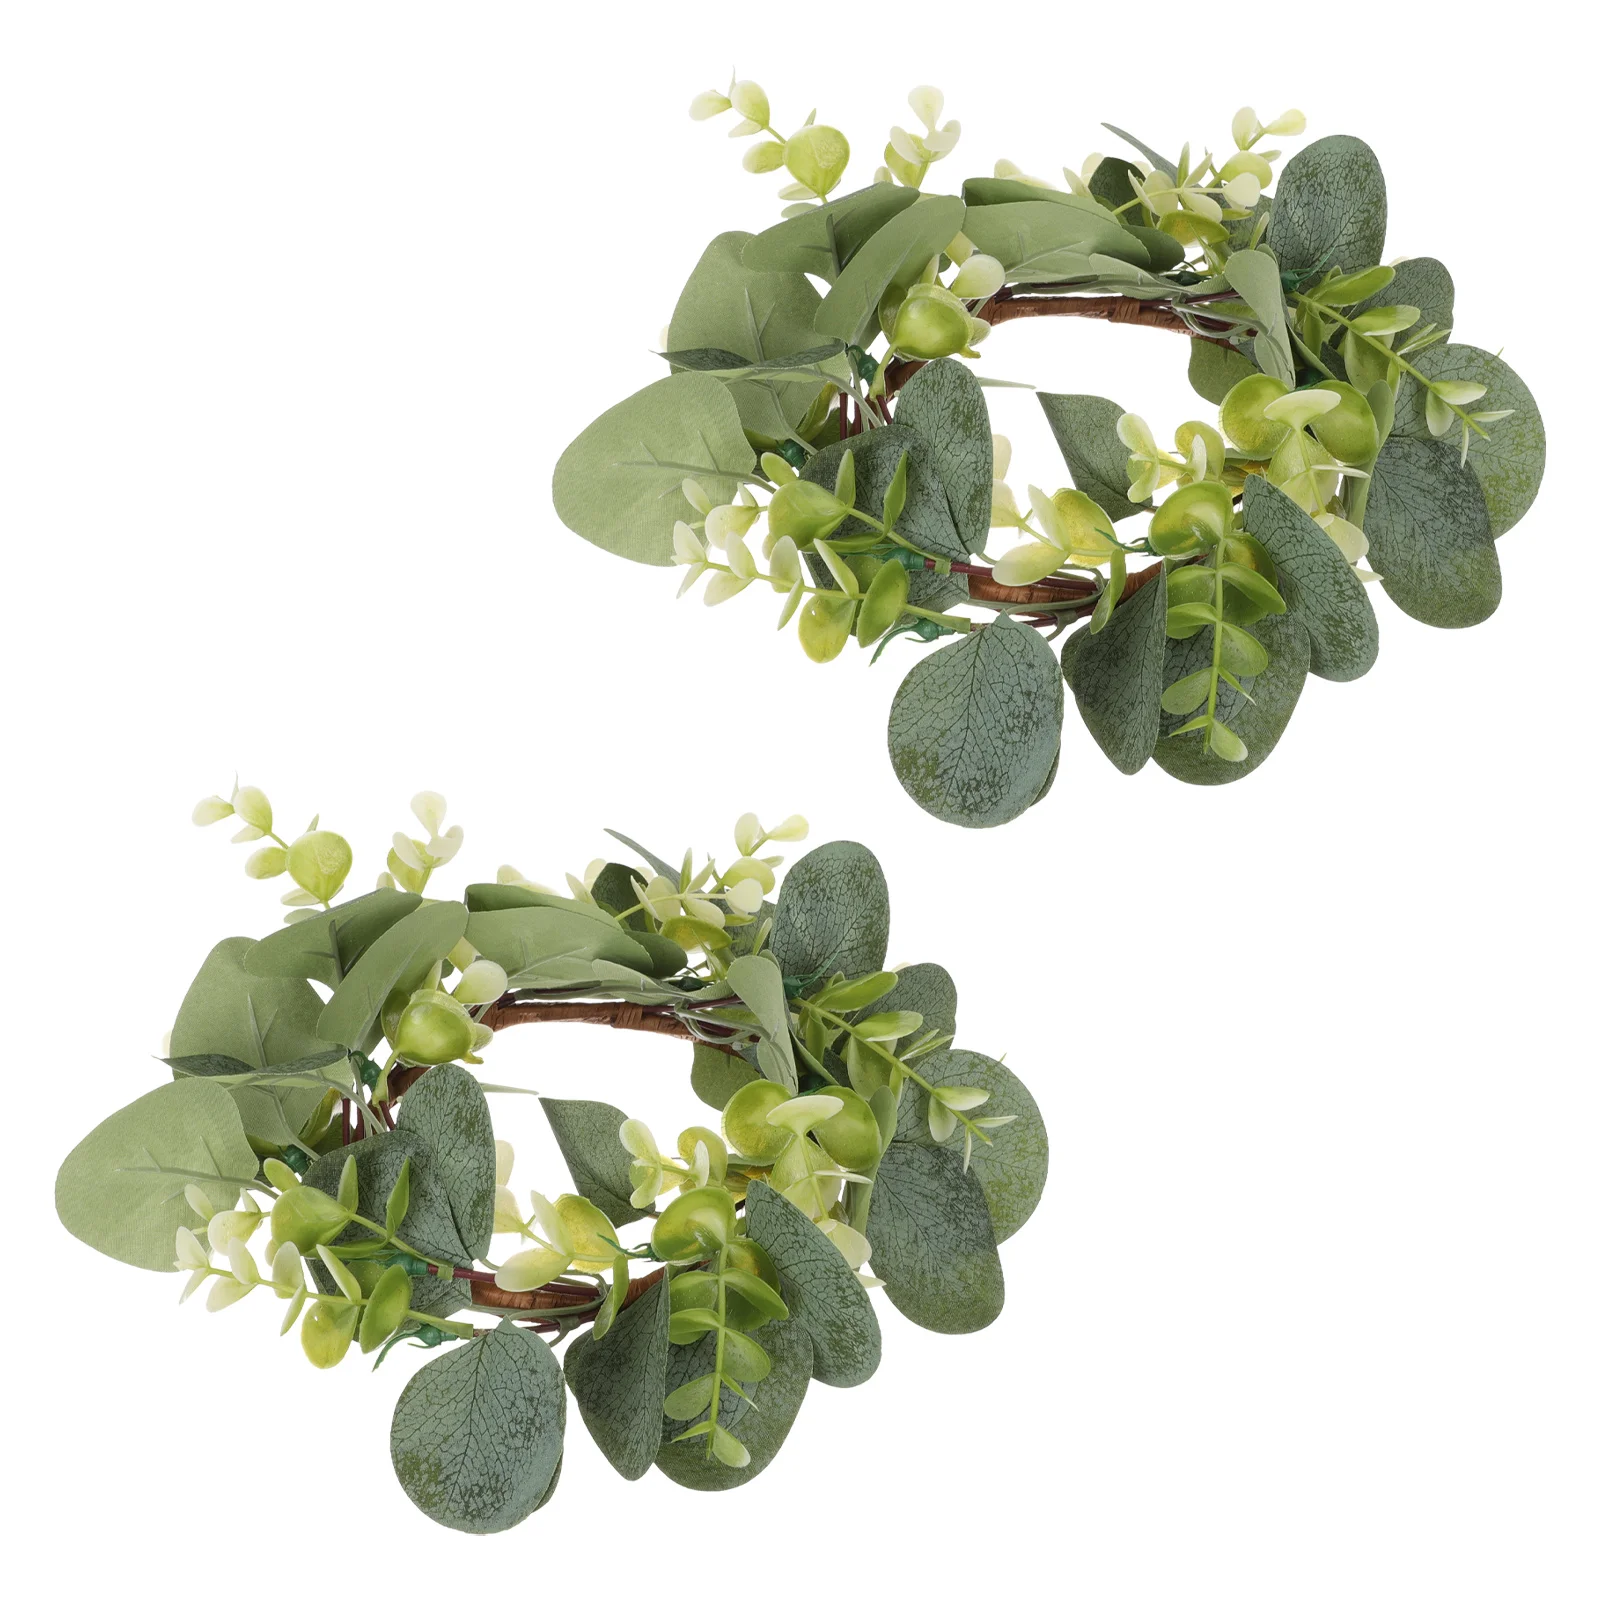 

Wreath Eucalyptus Rings Ring Leaves Wreaths Artificial Pillar Mini Leaf Greenery Wedding Garland Holder Fall Decorative Green